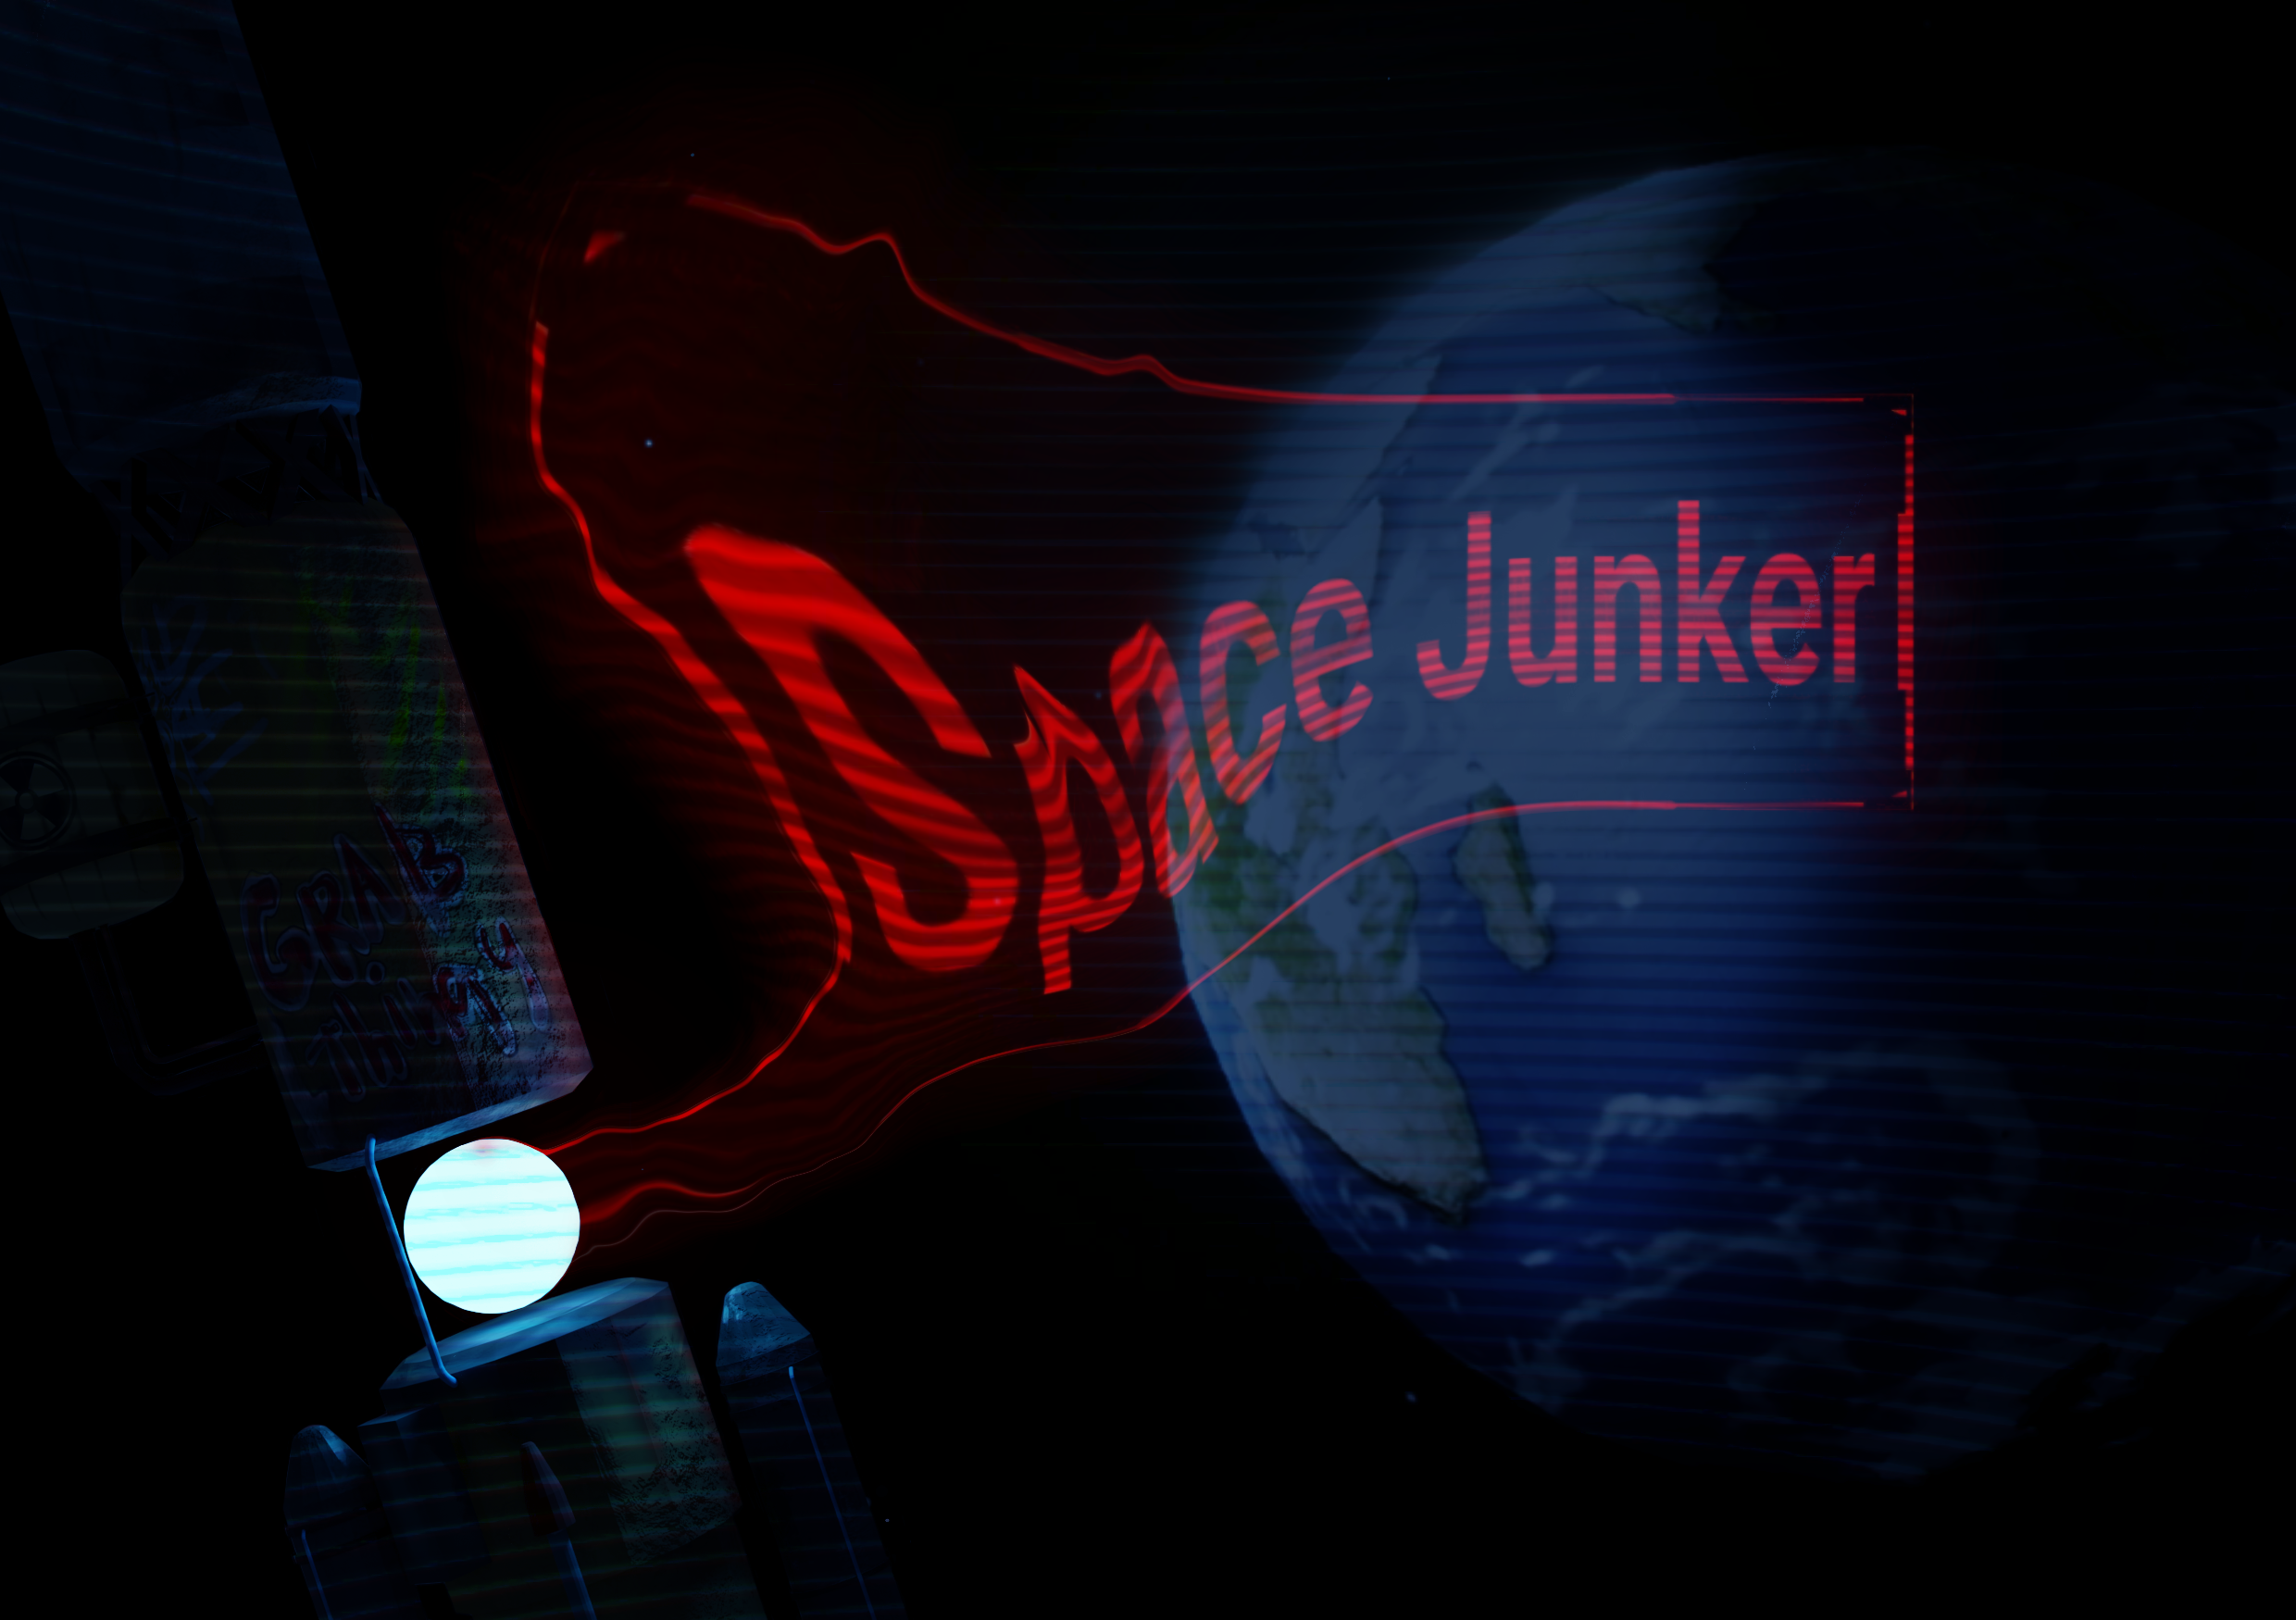 SpaceJunker